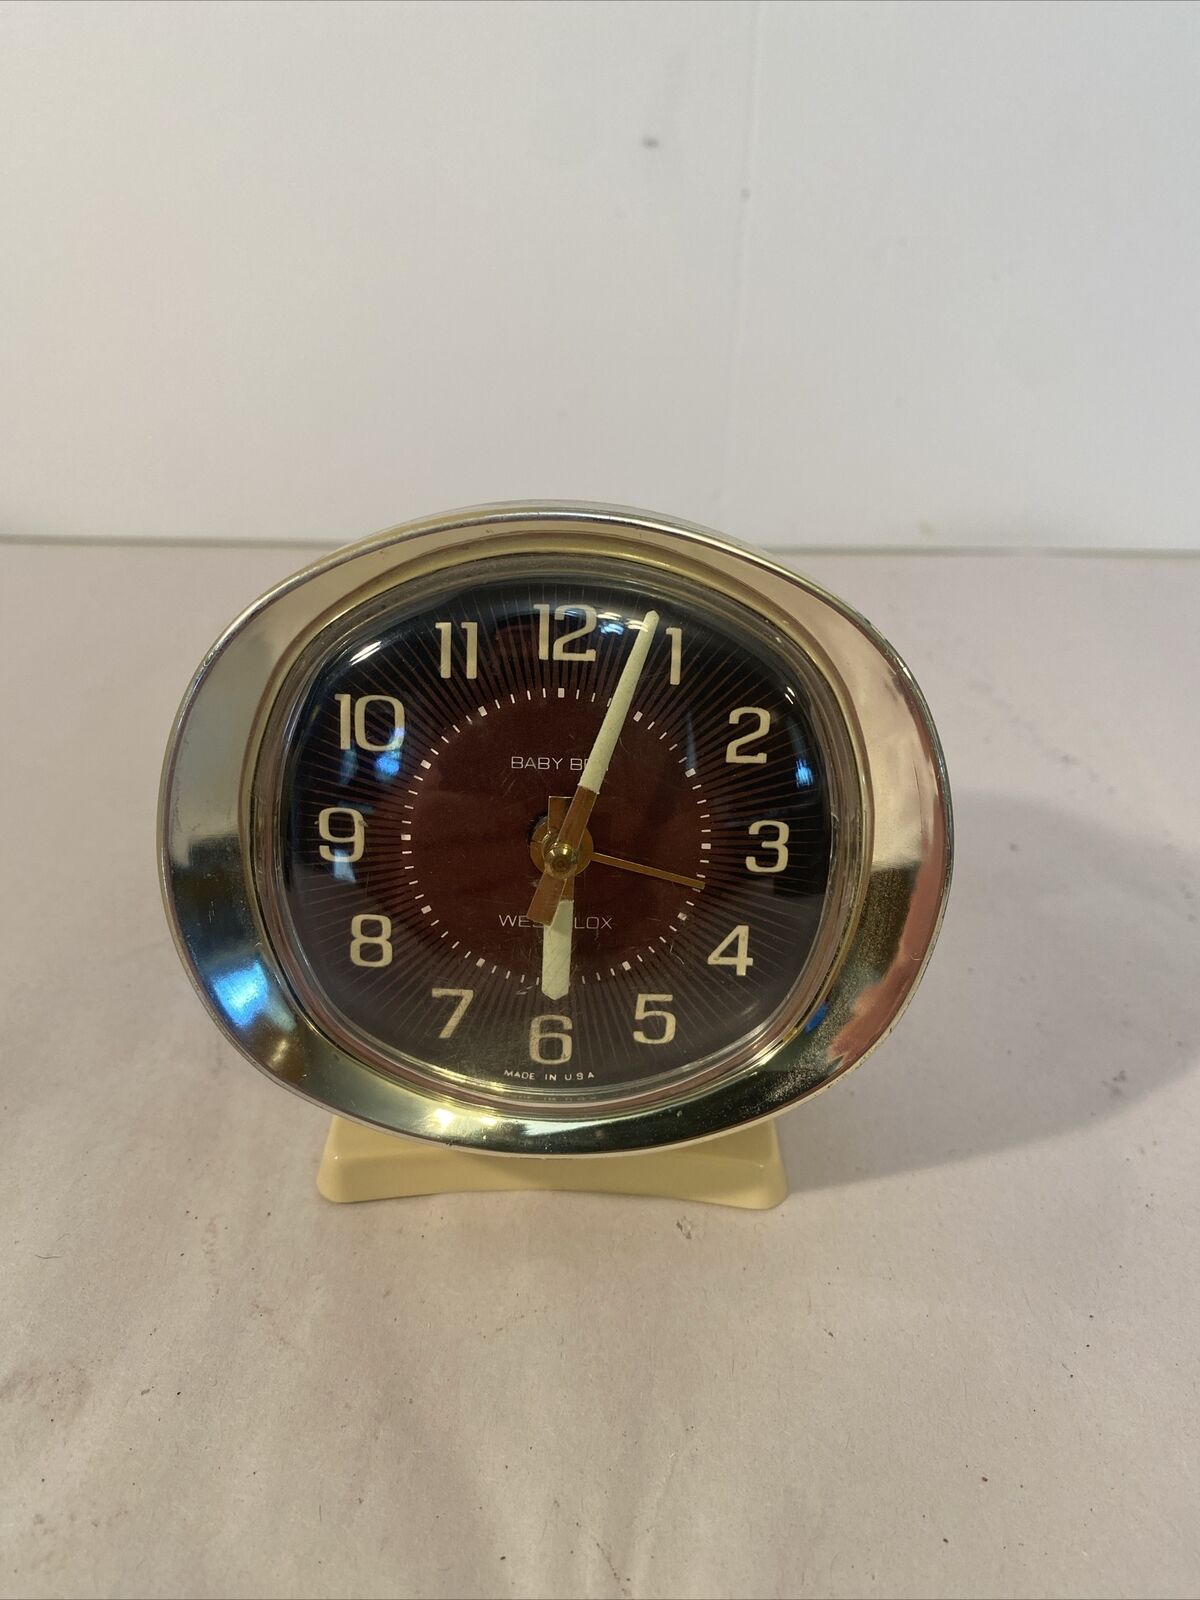 Vintage Westclox Baby Ben Wind Up Alarm Clock USA Cream/Gold Glows